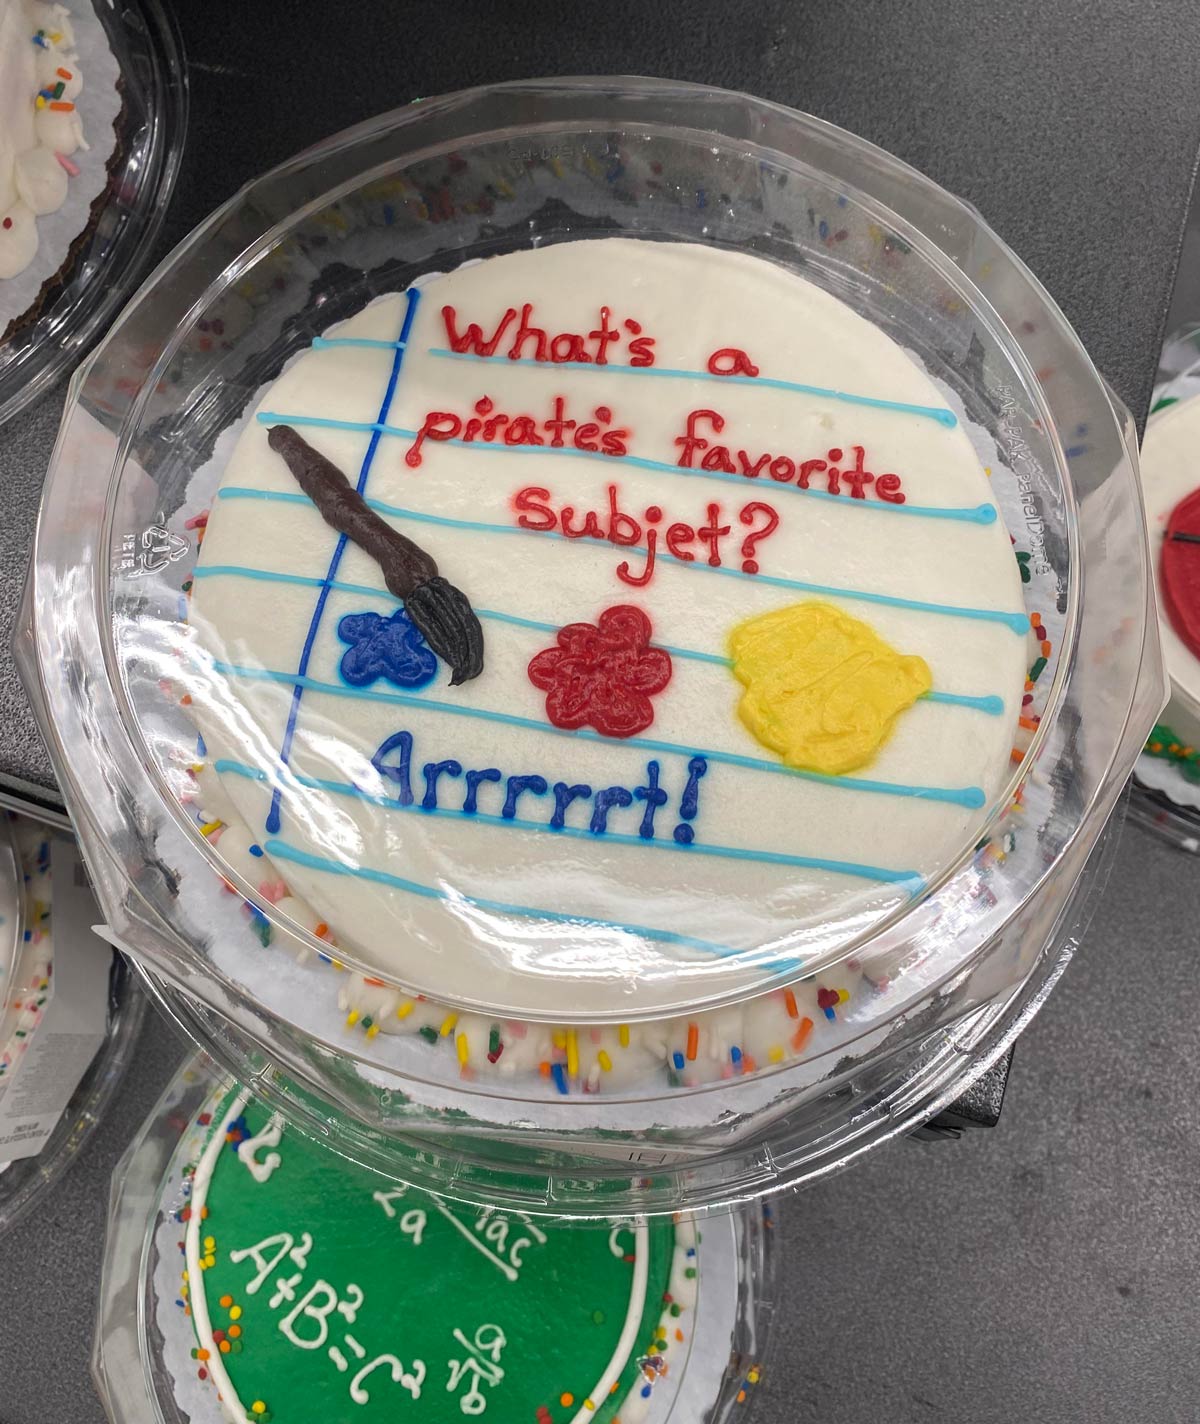 Found this cake at Walmart